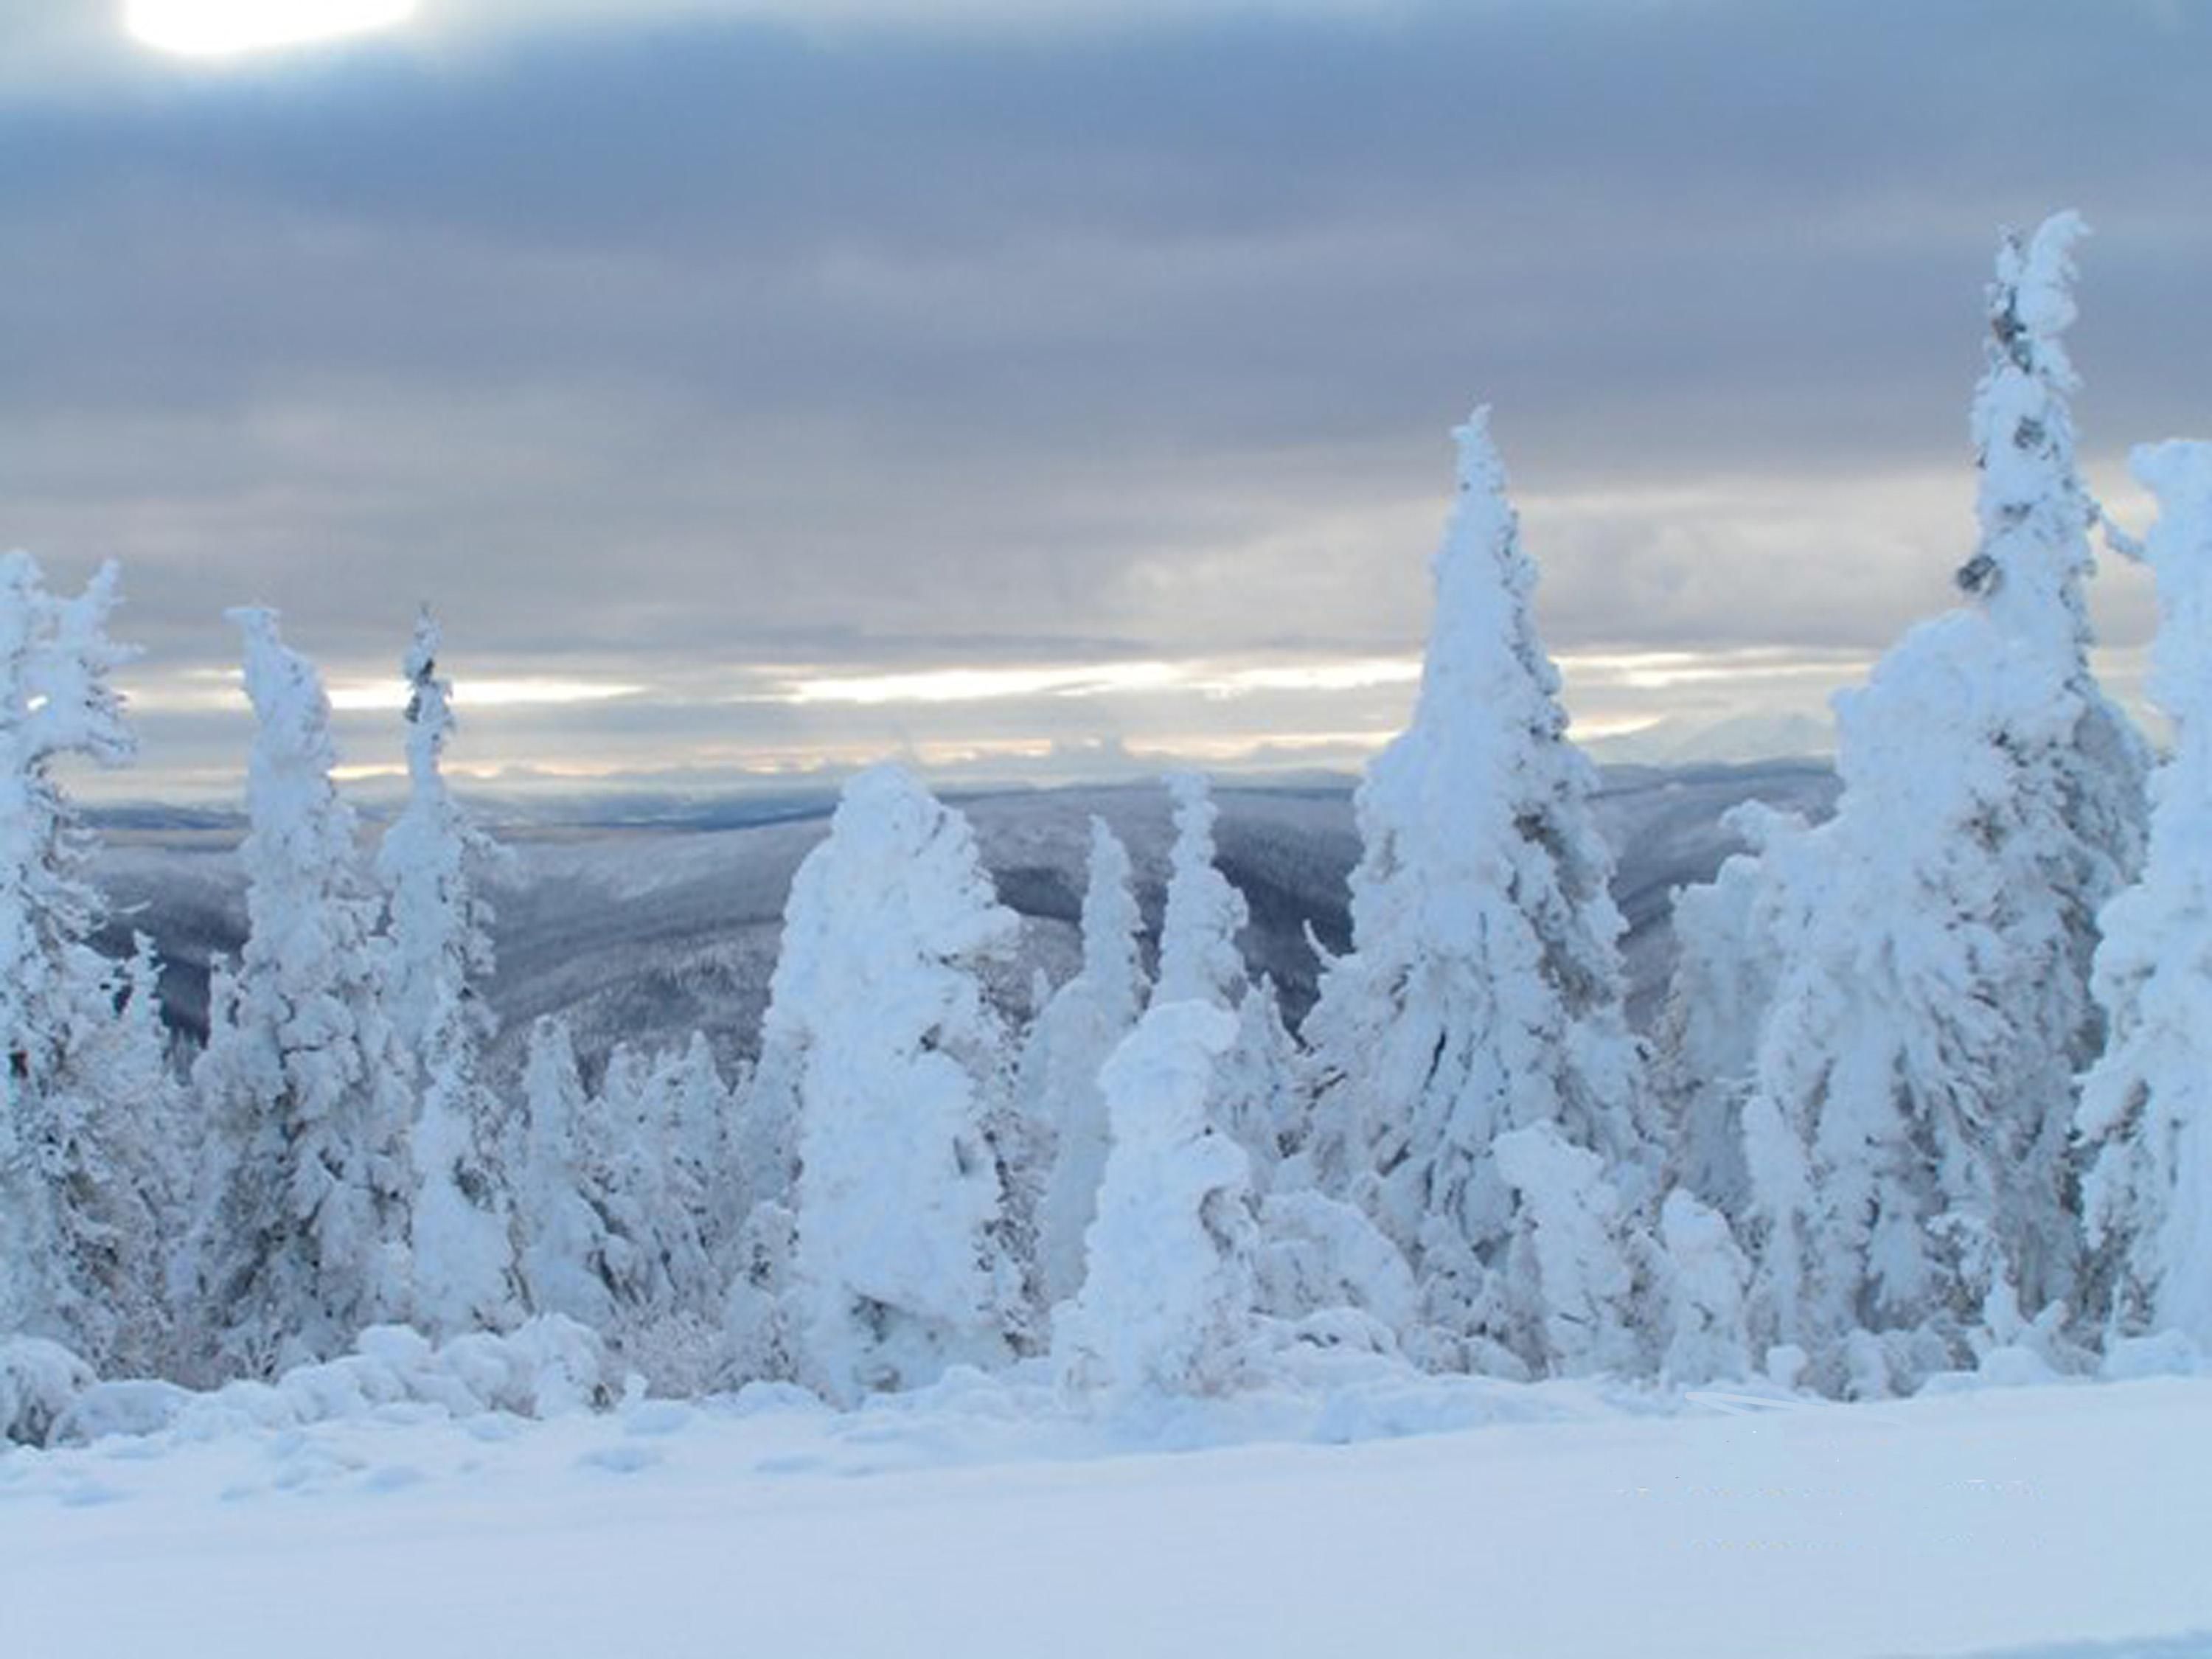 File:Snow wallpaper.jpg - Wikimedia Commons